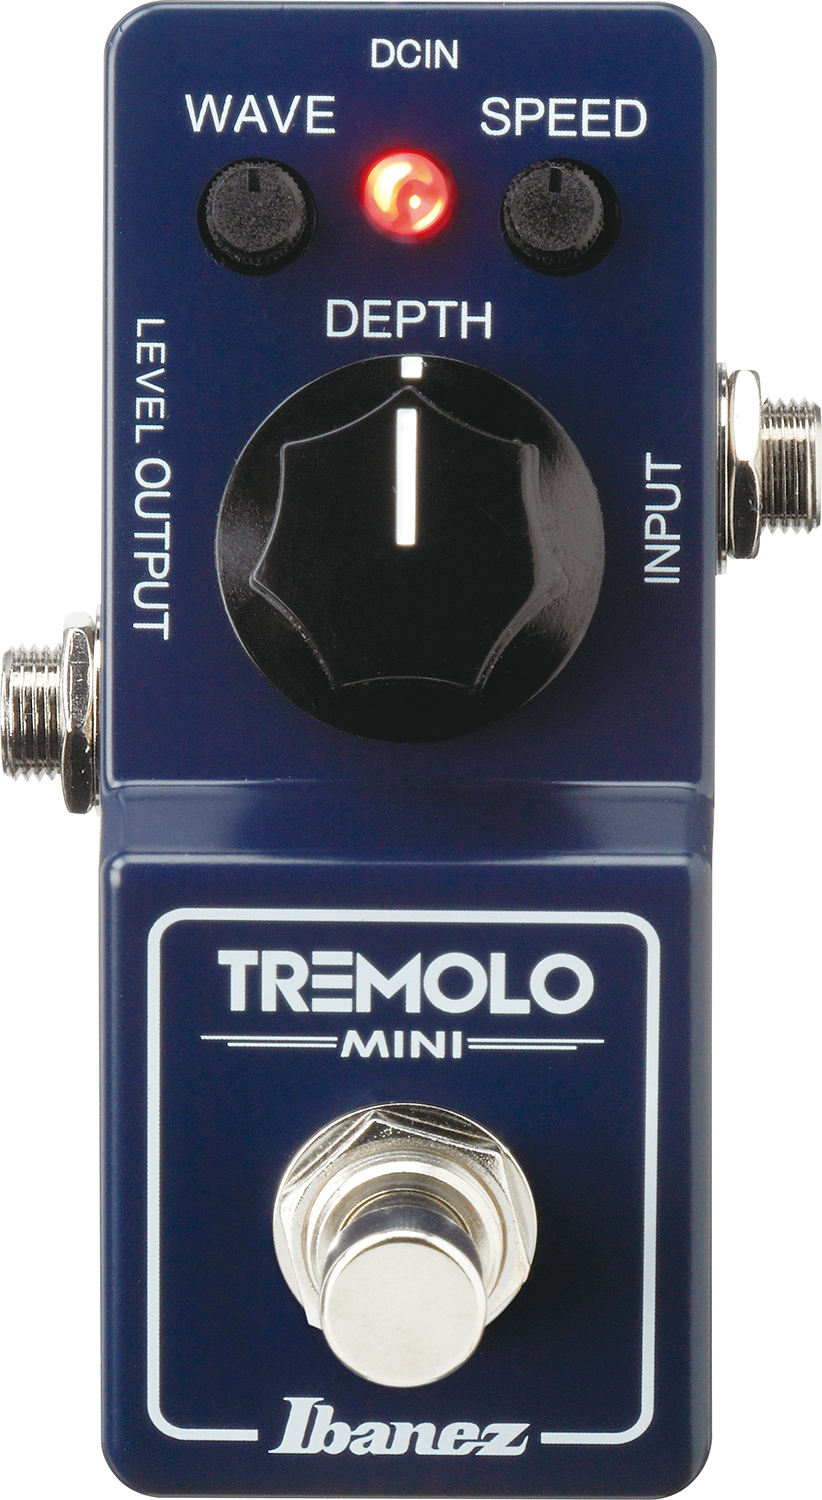 Køb Ibanez TRMINI Tremolo Mini Guitar Pedal - Pris 785.00 kr.